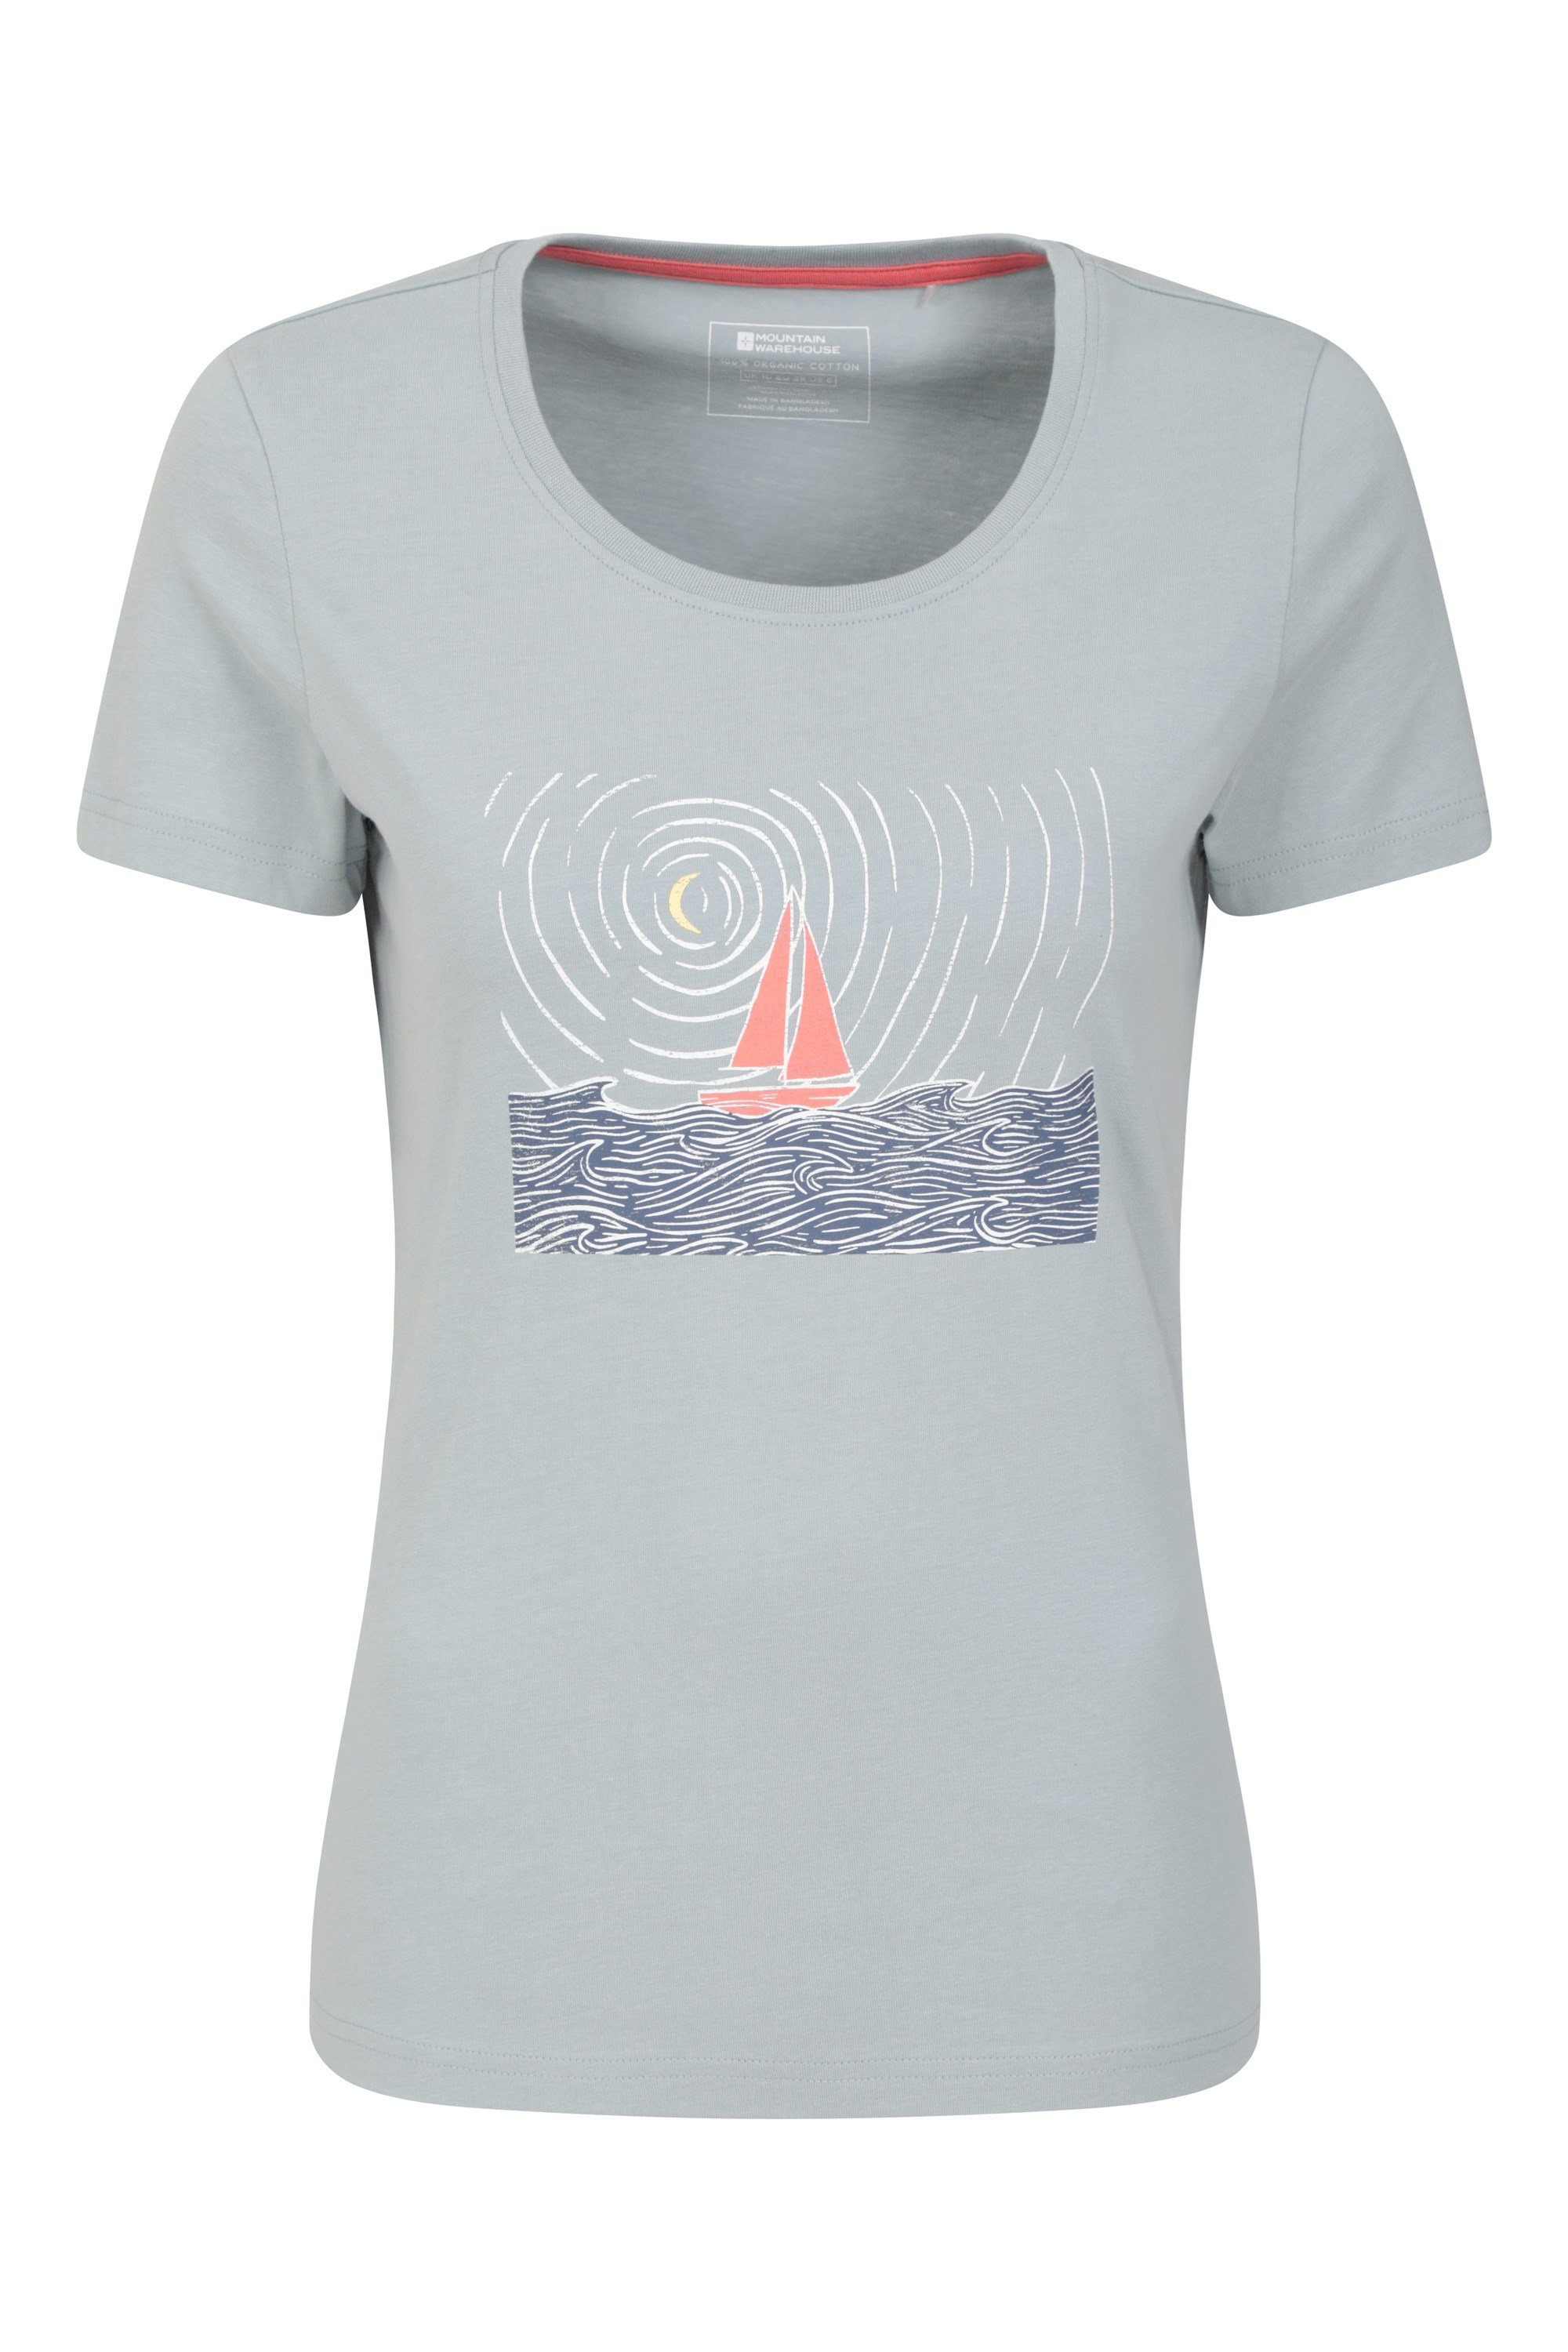 Sail Boat Womens Organic T-shirt - Blue